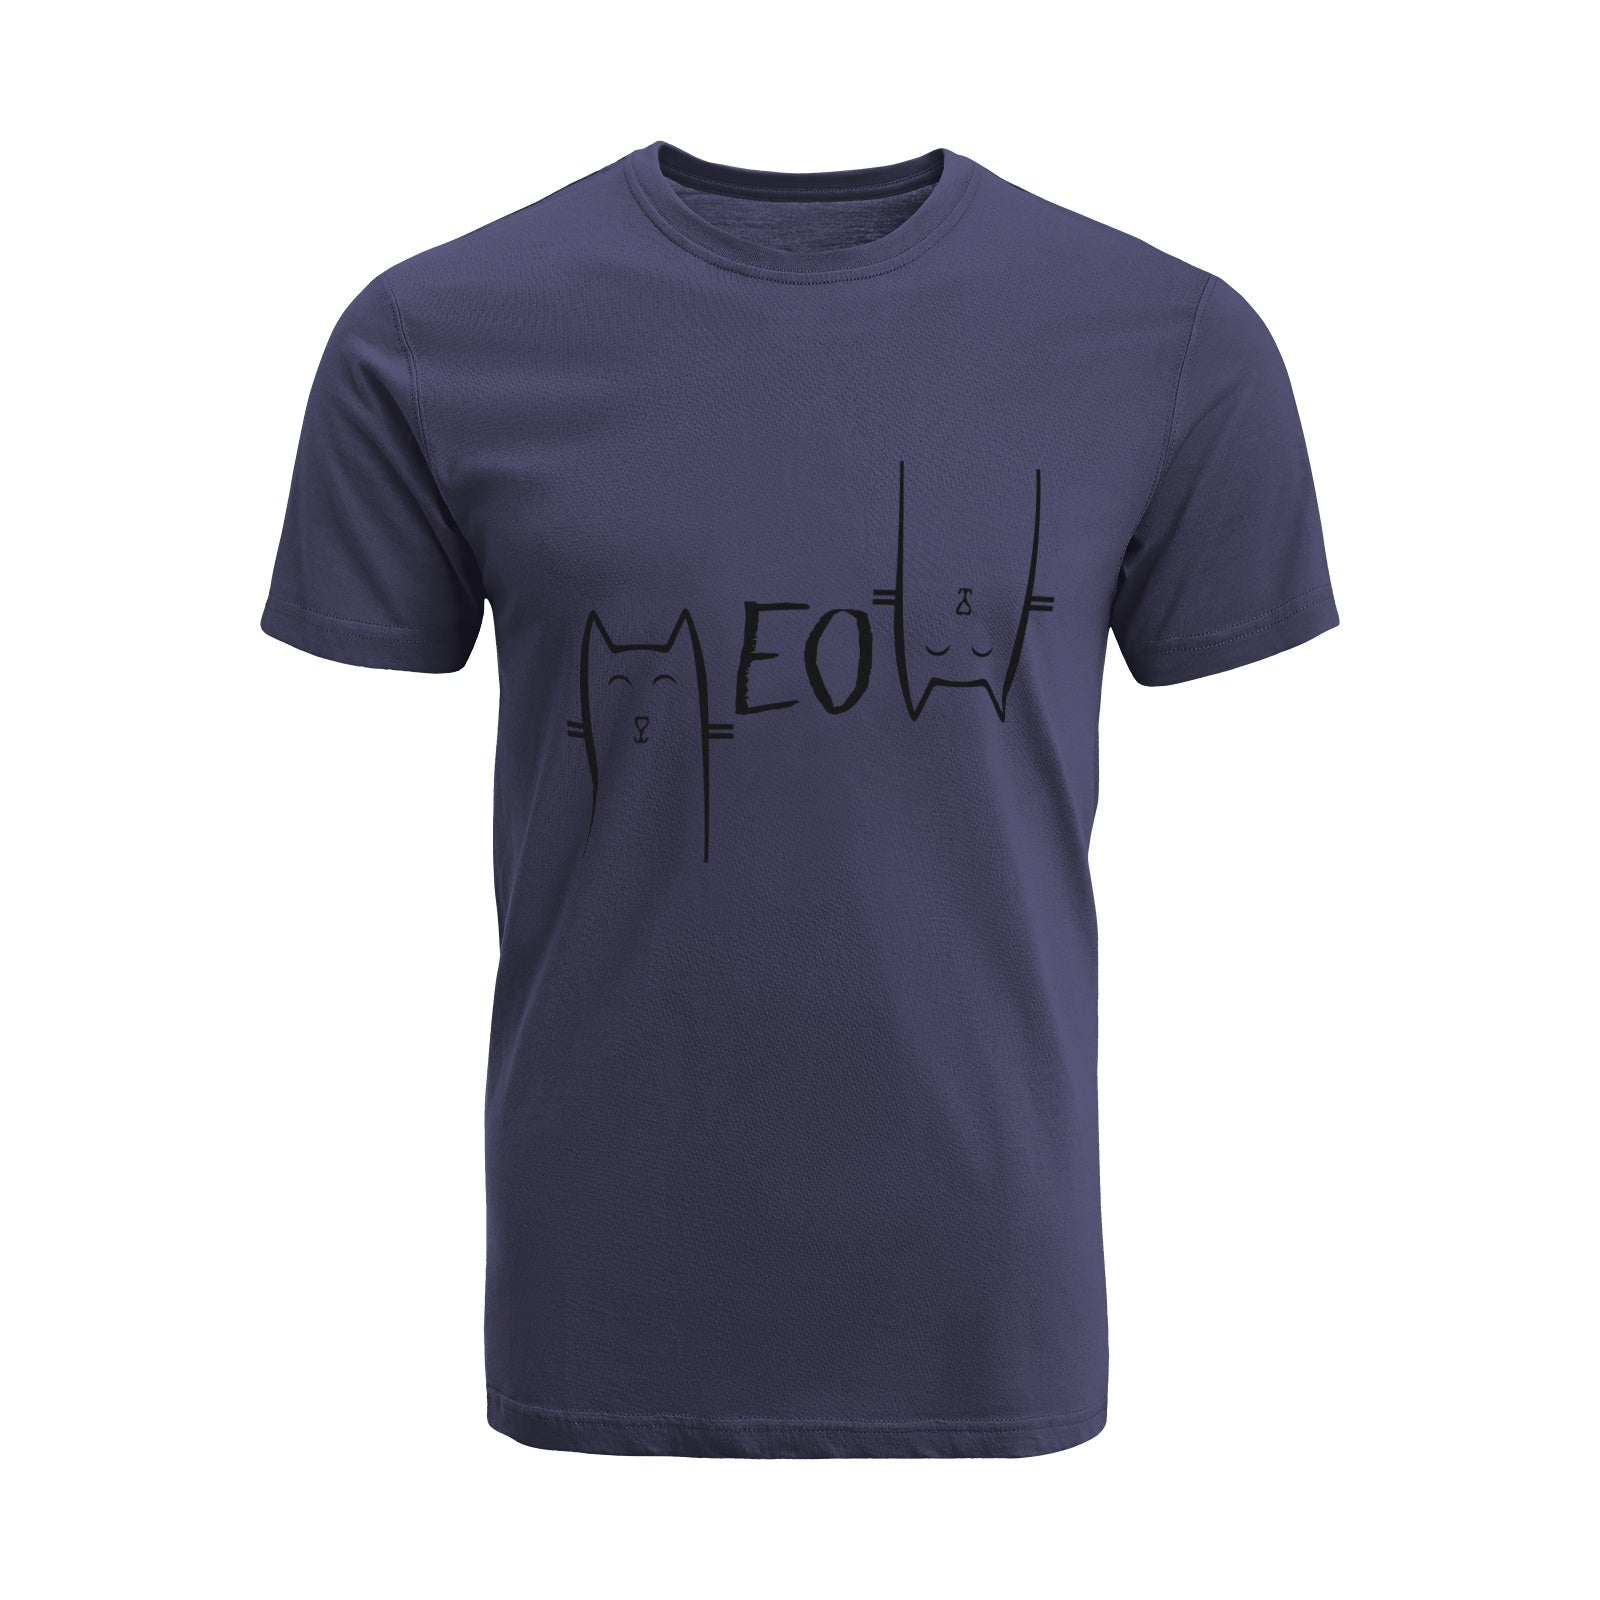 Unisex Short Sleeve Crew Neck Cotton Jersey T-Shirt CAT 06 - Tara-Outfits.com